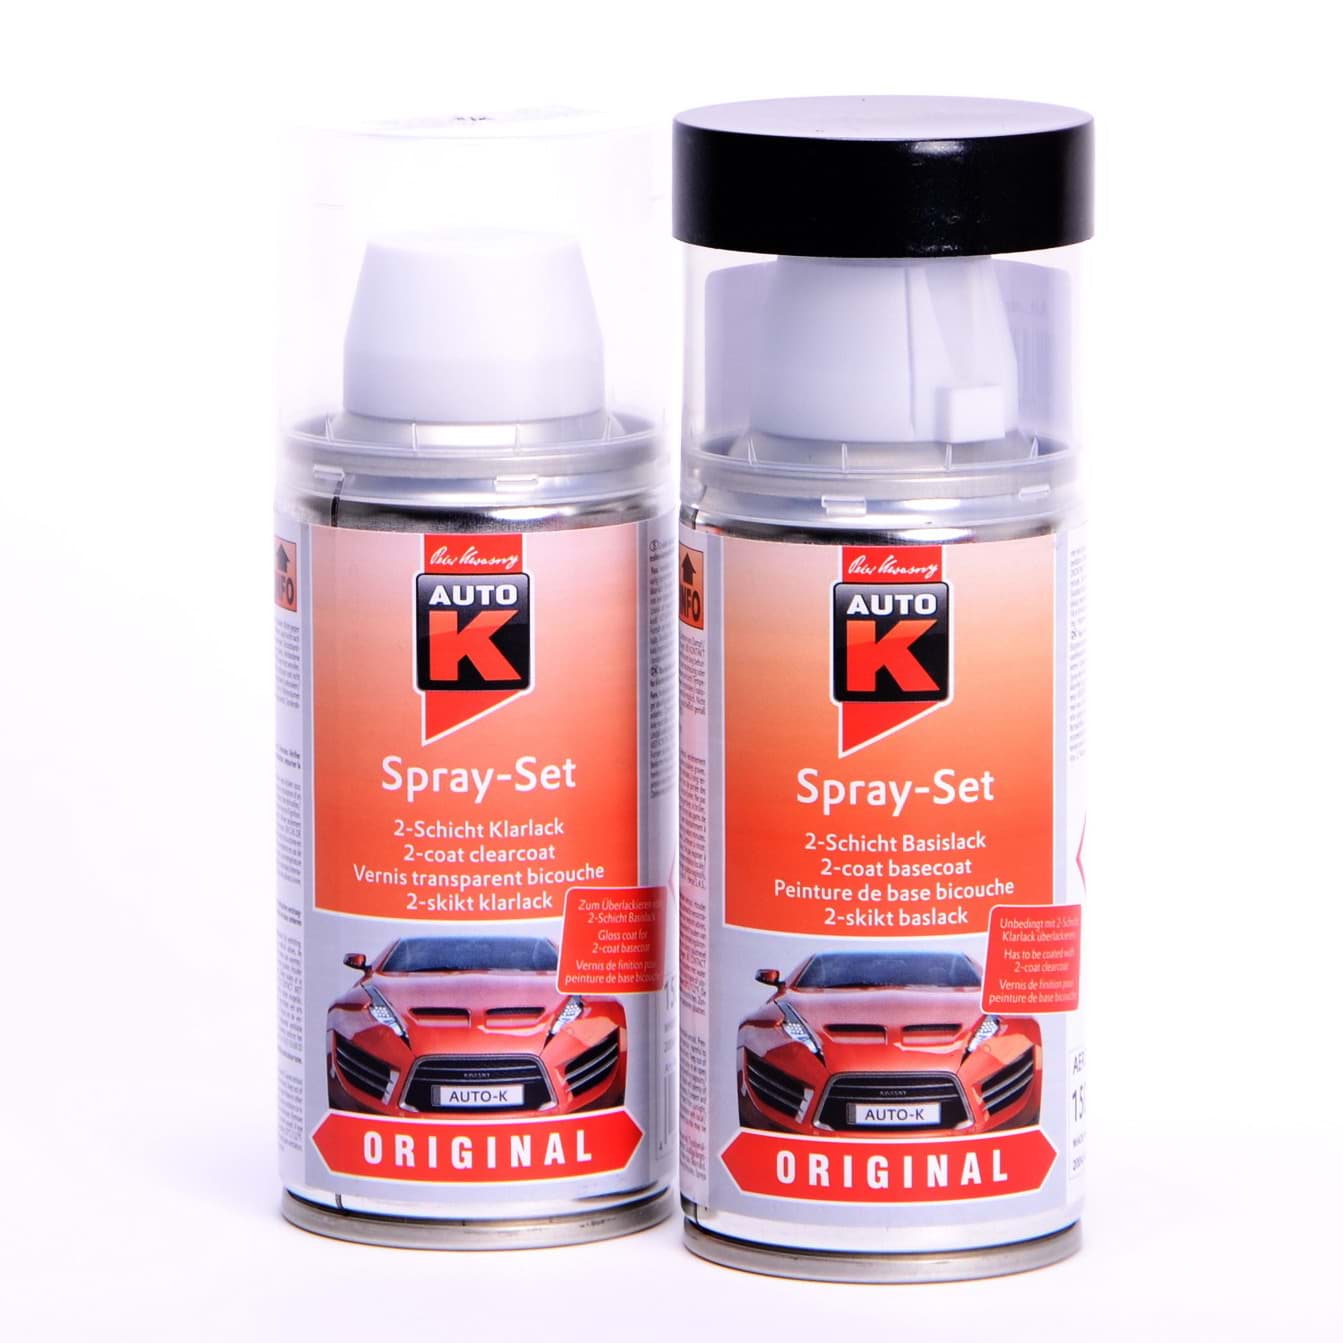 Afbeelding van Auto-K Spray-Set Autolack für Volkswagen, VW, Audi LY7T Kristallsilber met 20640